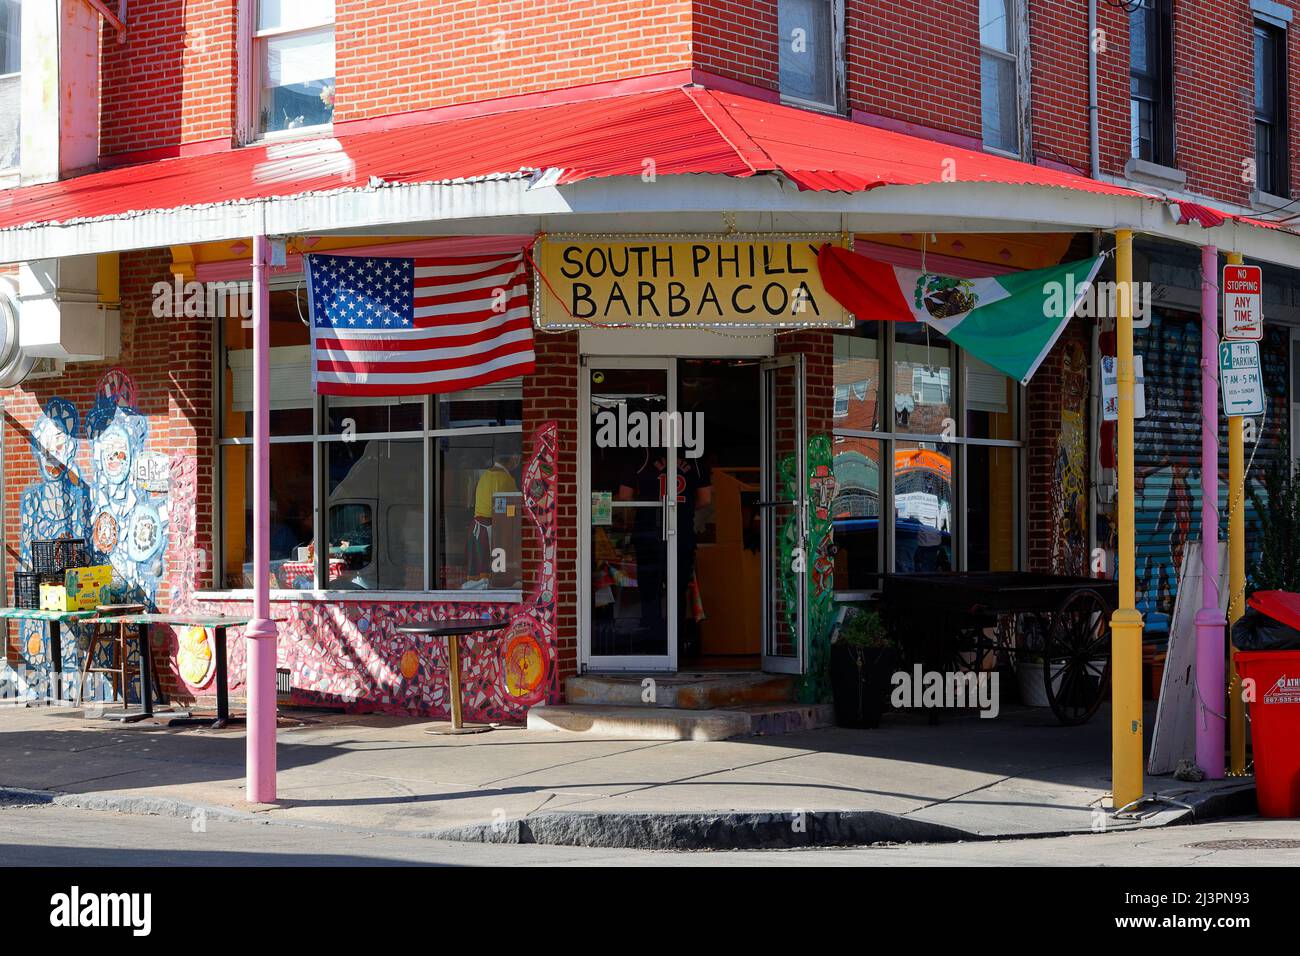 South Philly Barbacoa, 1140 S 9th St, Philadelphia, Pennsylvania. Escaparate exterior de un restaurante mexicano en el mercado italiano. Foto de stock